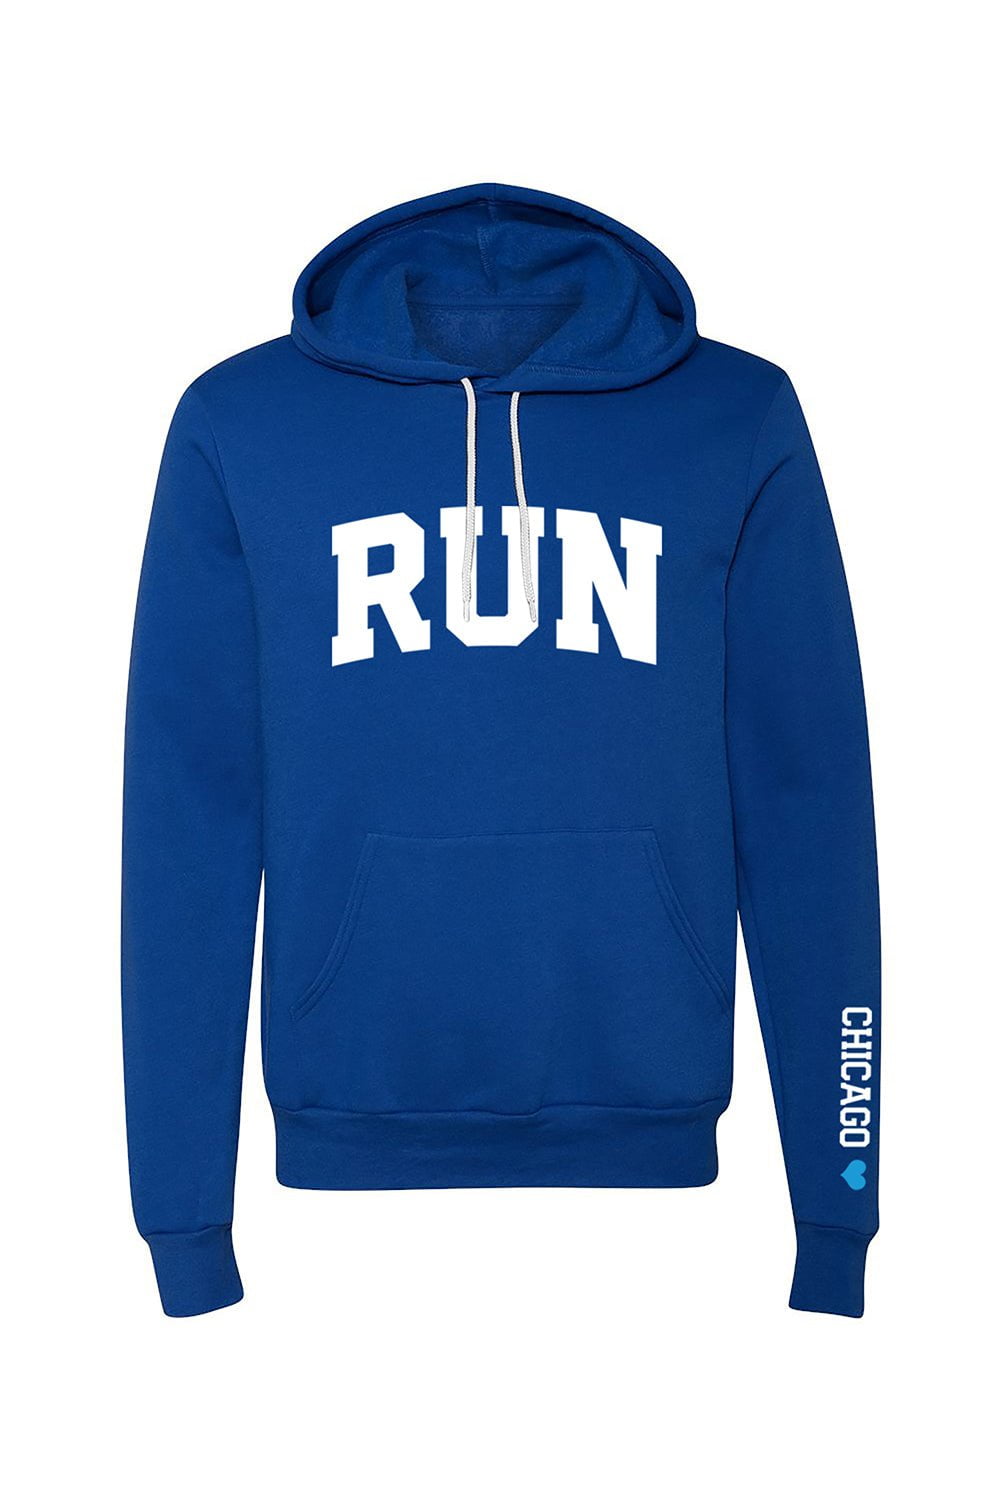 Sarah Marie Design Studio Sweatshirt XSmall / Royal Blue Run Chicago 💙 Hoodie